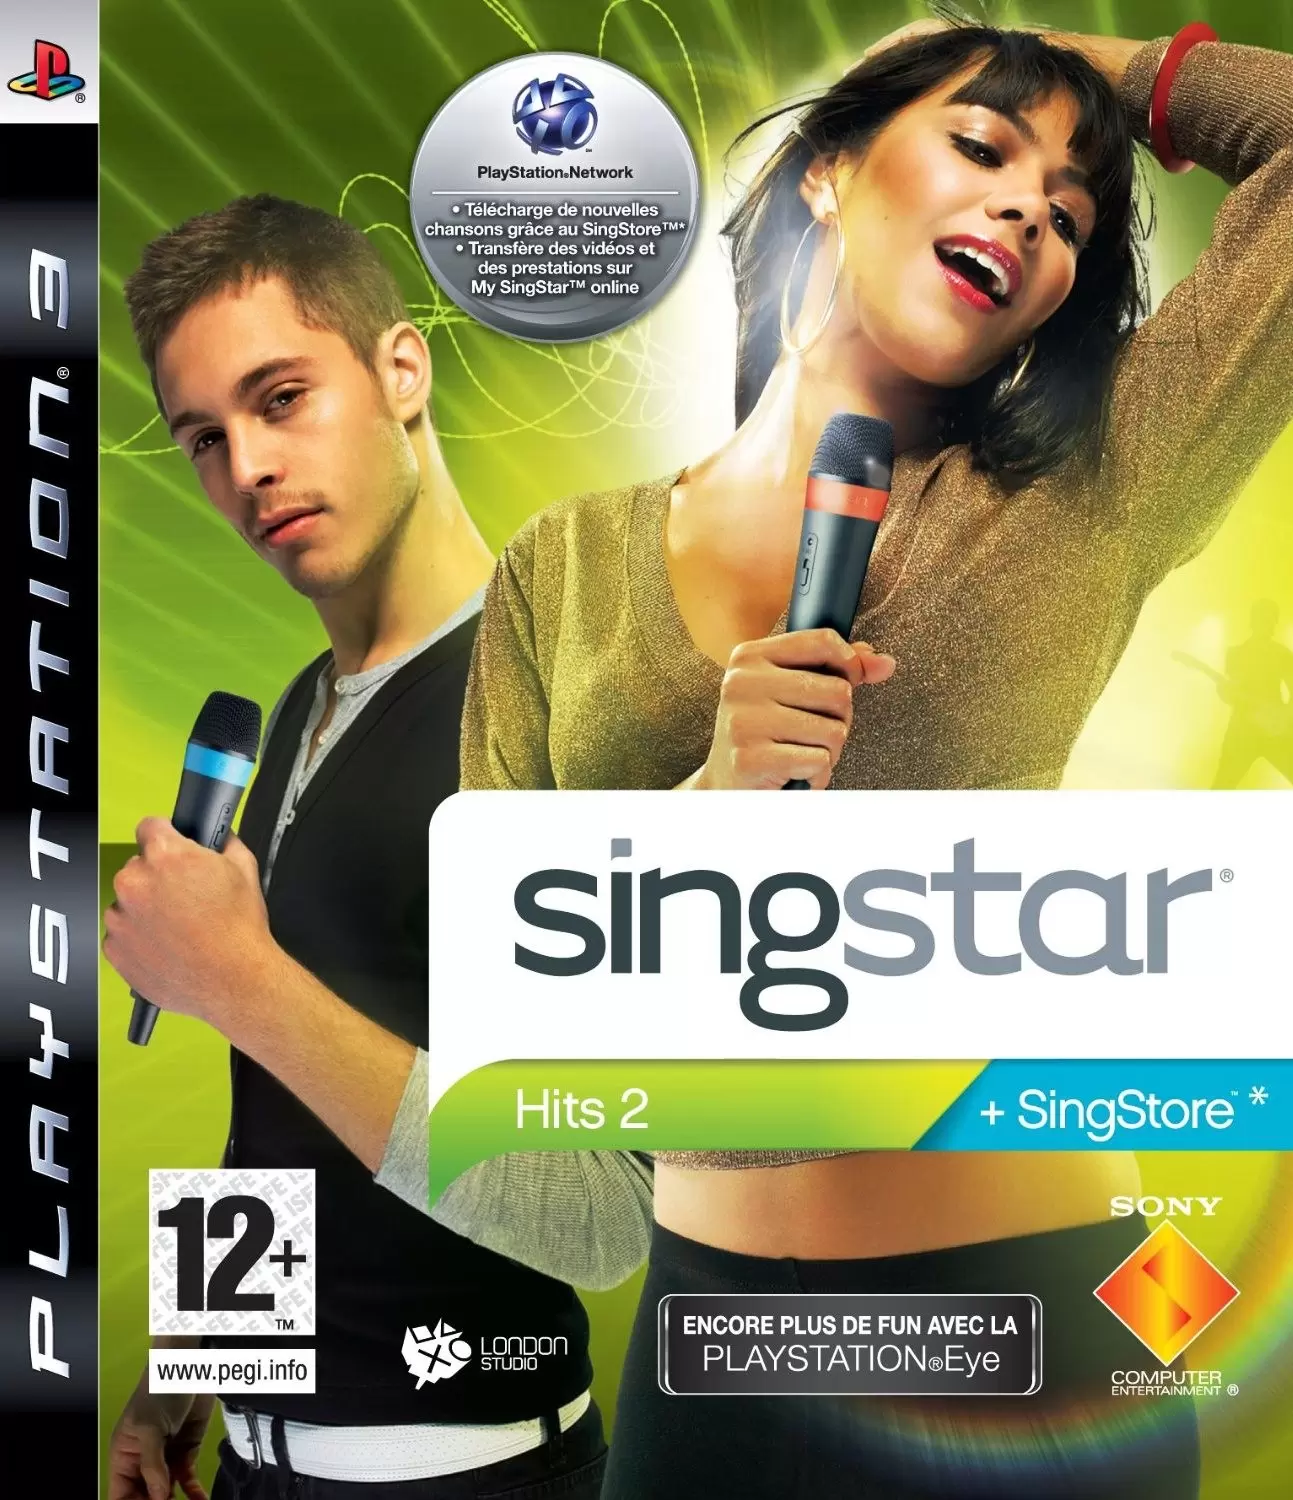 PS3 Games - SingStar Hits 2